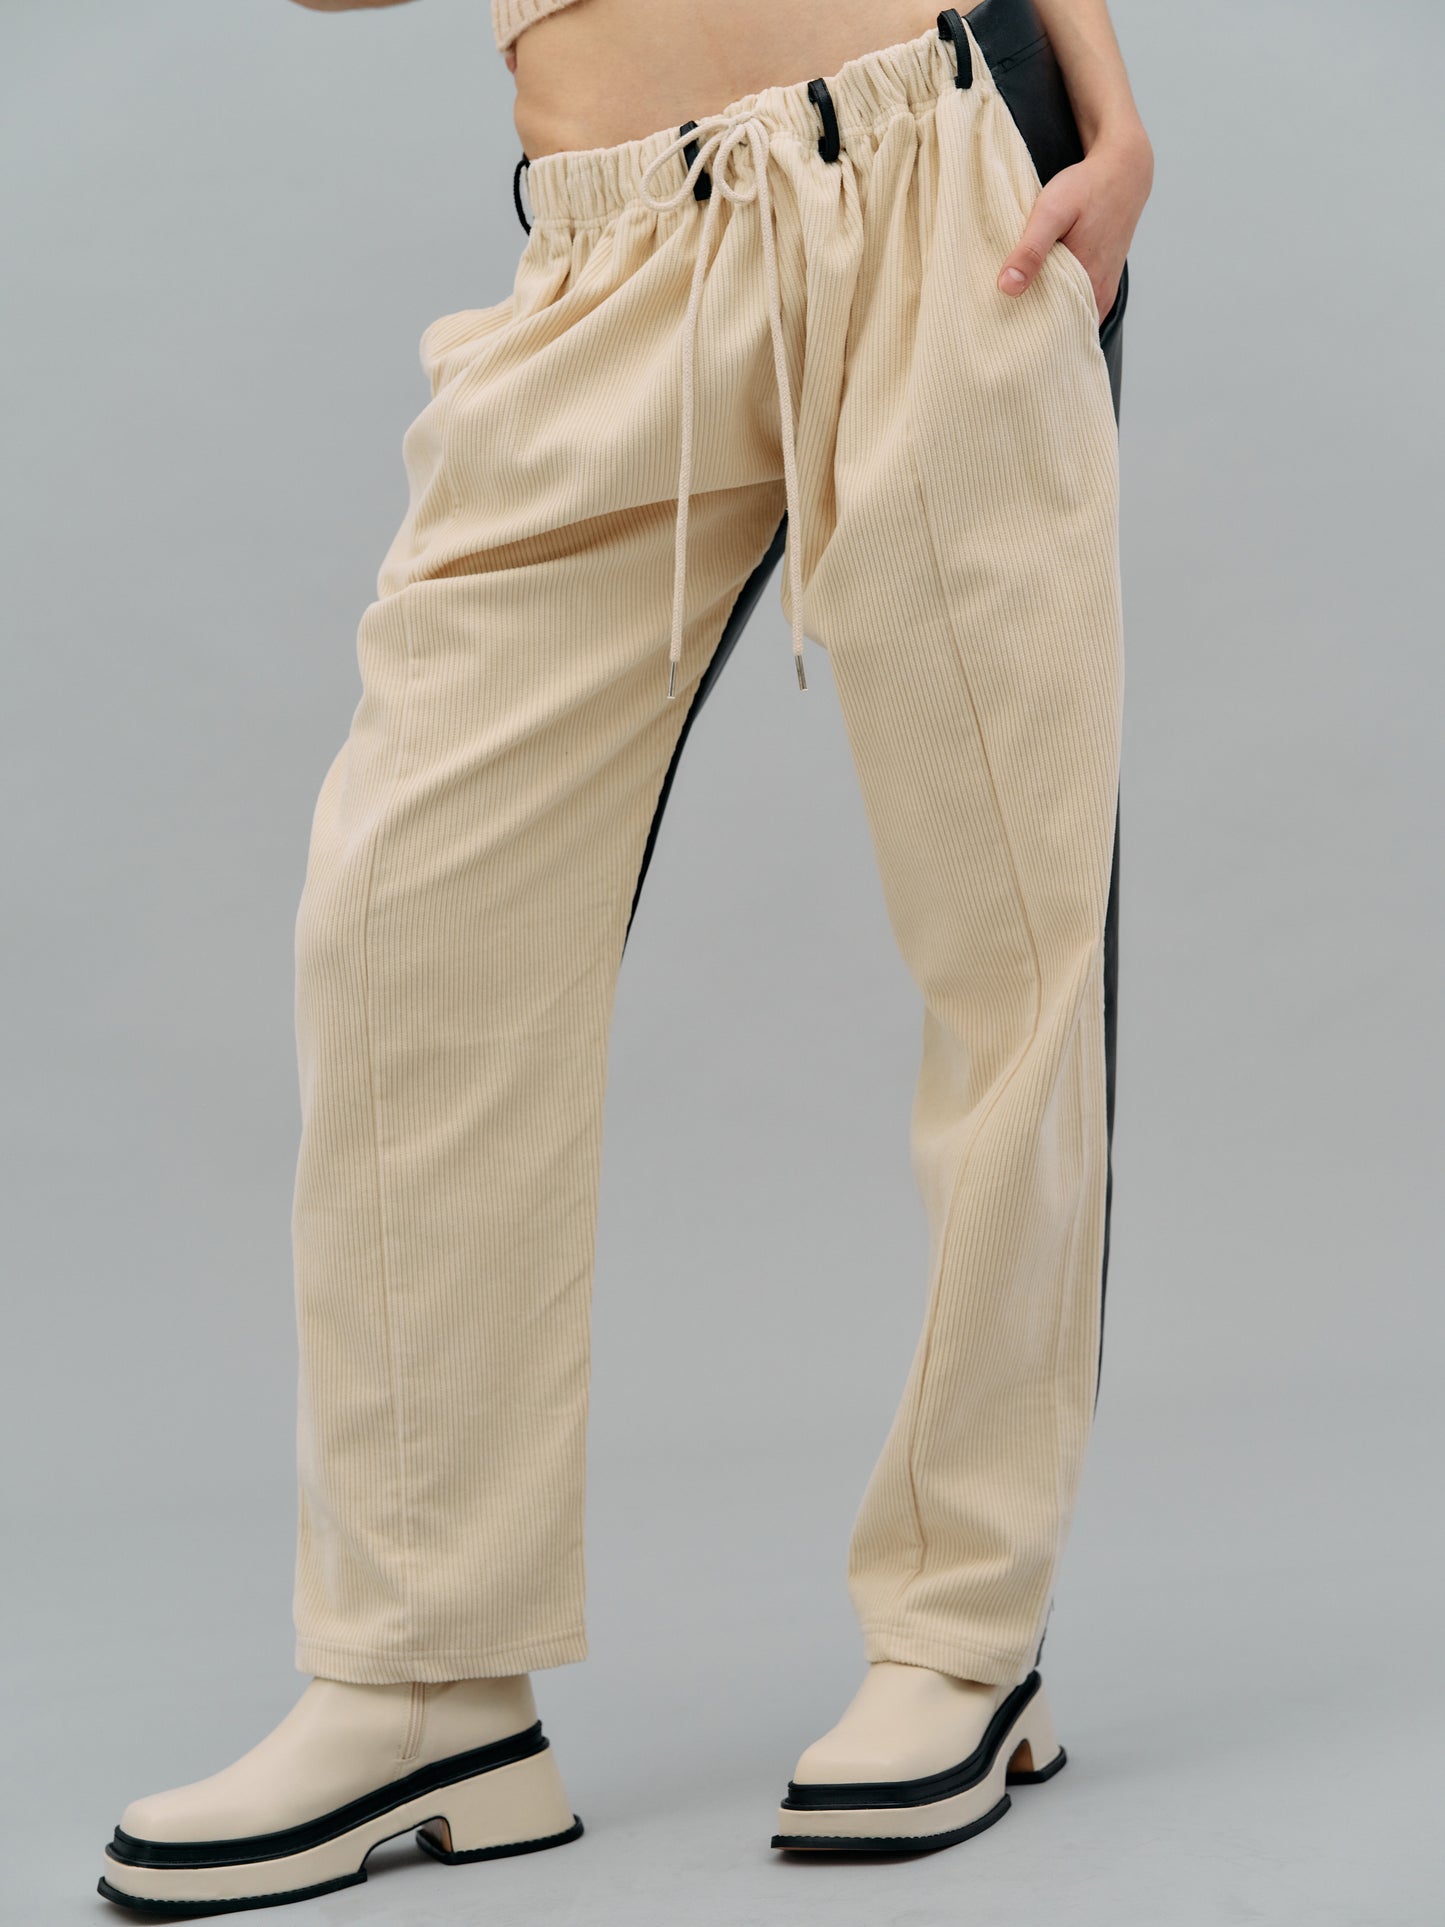 Back Leather Corduroy Pants, Cream & Black